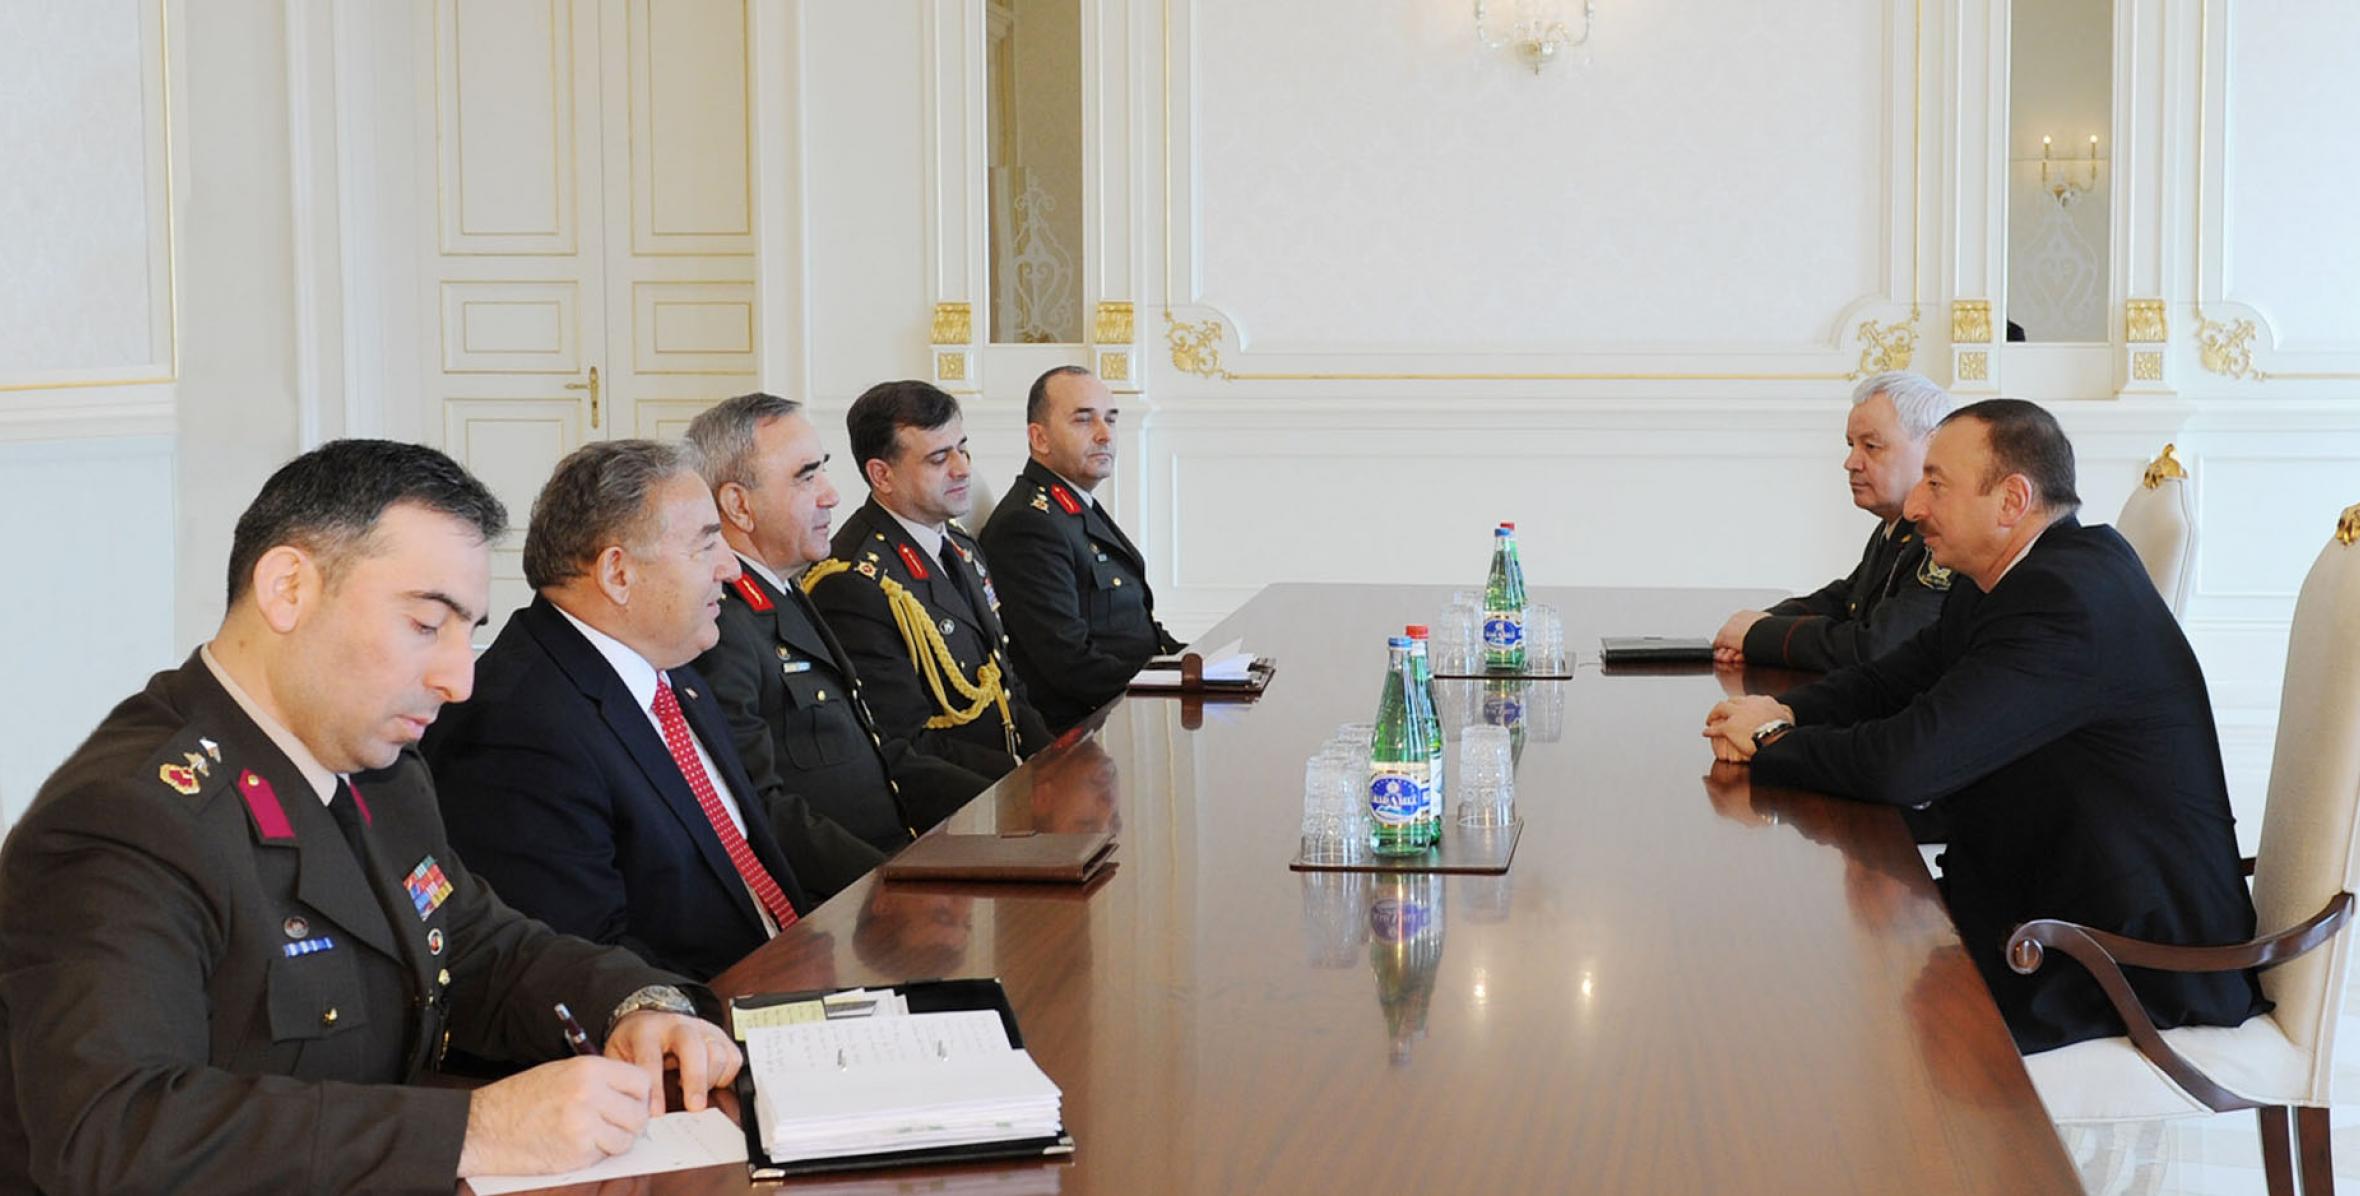 Ilham Aliyev received a delegation led by Commander of the Turkish Land Forces, Erdal Ceylanoglu